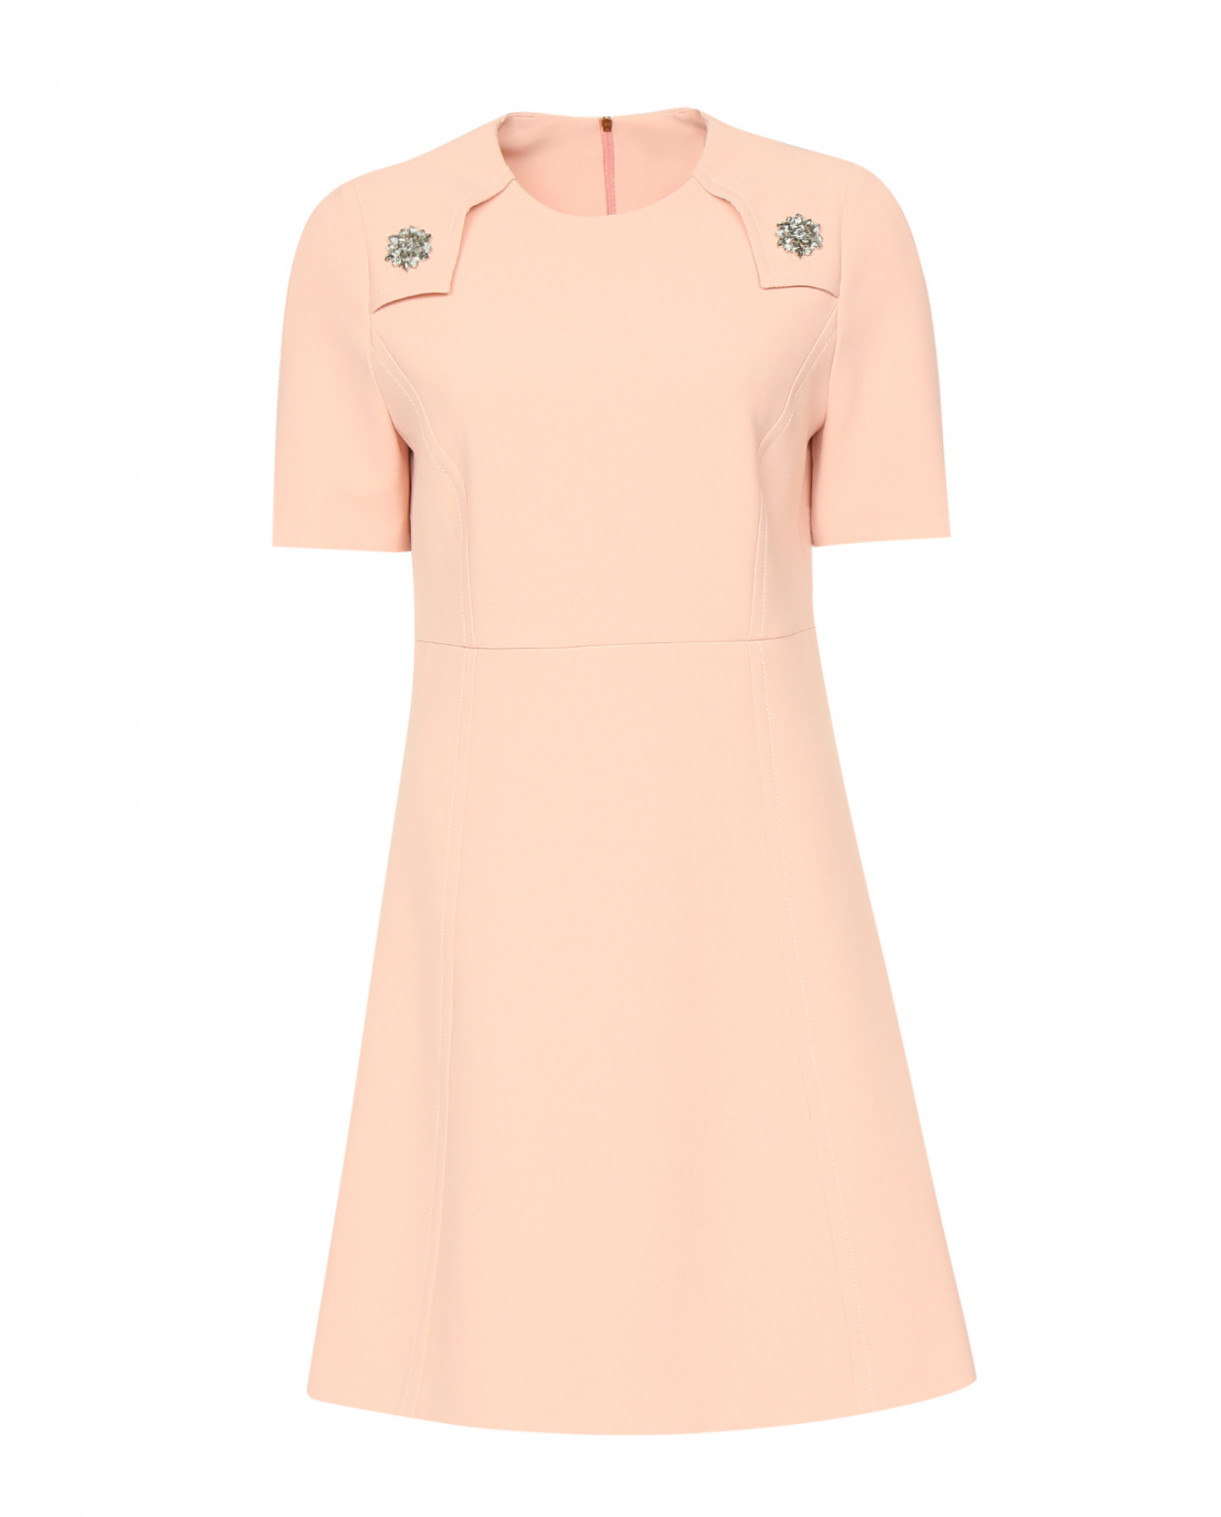 Платье-мини с коротким рукавом декорированное камнями Tara Jarmon  –  Общий вид  – Цвет:  Розовый